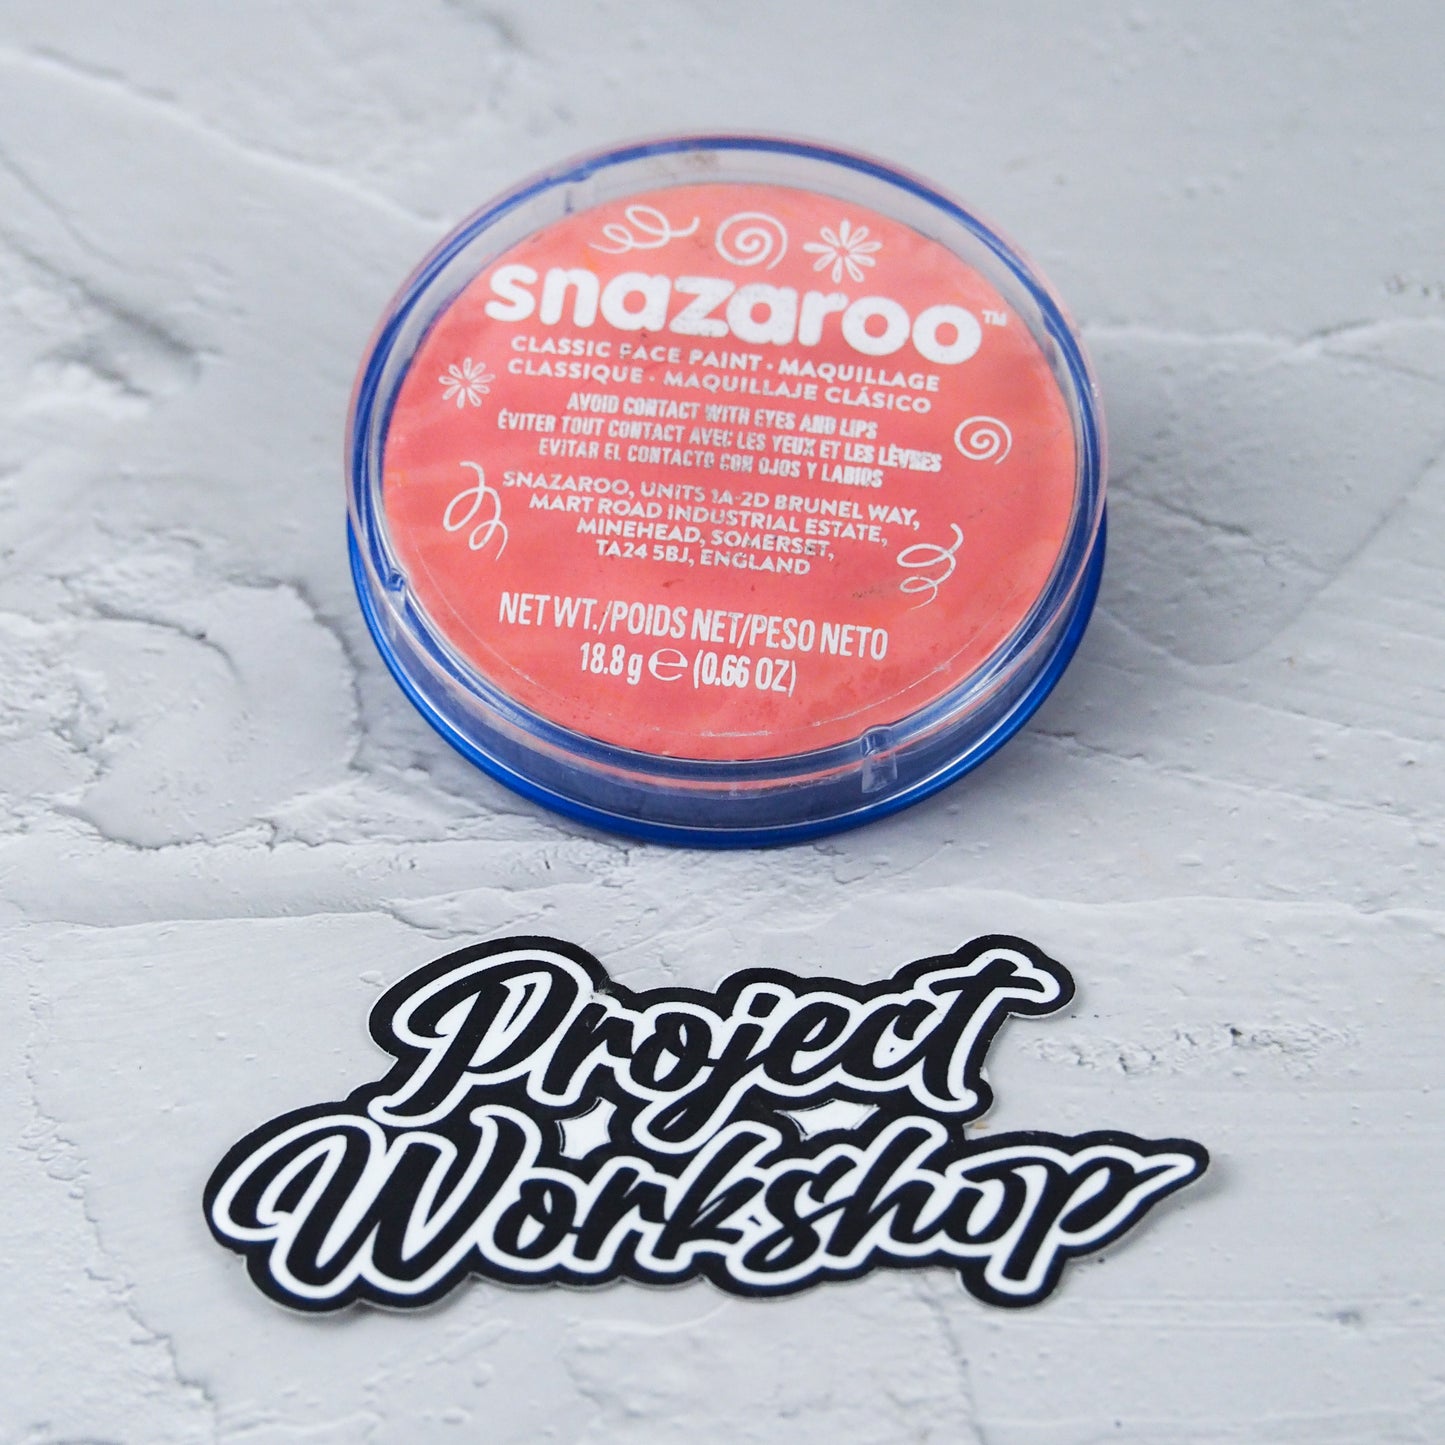 Snazaroo Classic Face Paint, 18ml, Orange